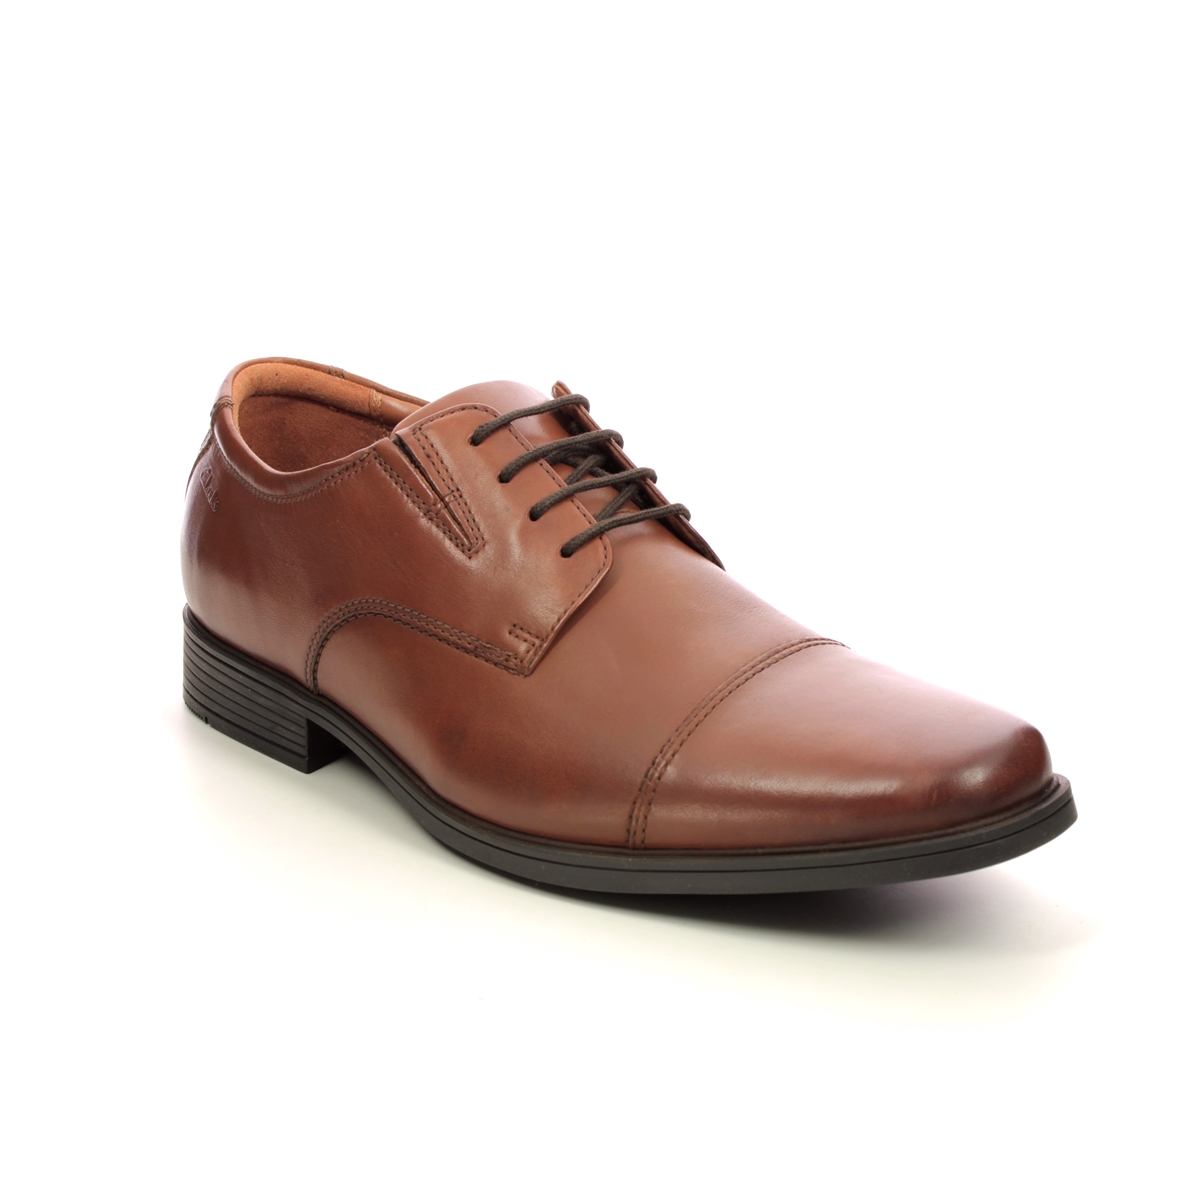 Clarks Tilden Cap Dark Tan Mens formal shoes 3009-68H